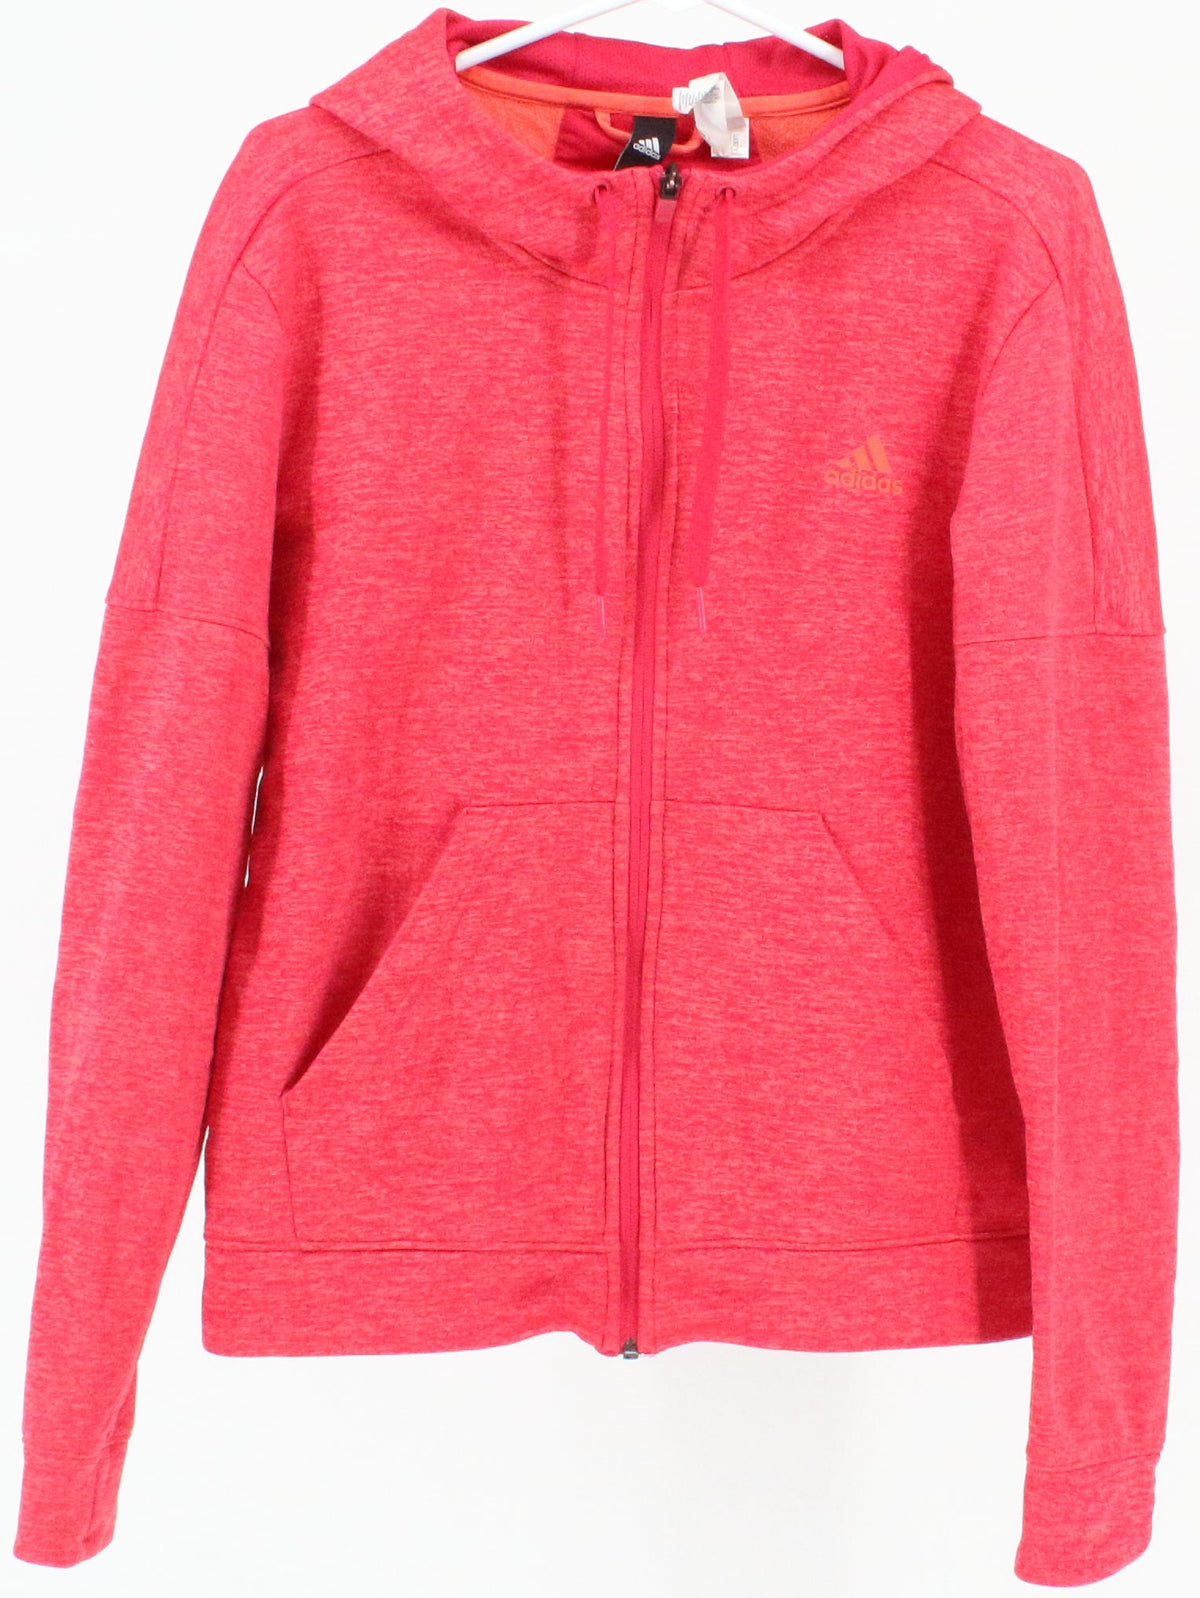 Adidas Climawarm Pink Melange Full Zip Hooded Sweatshirt